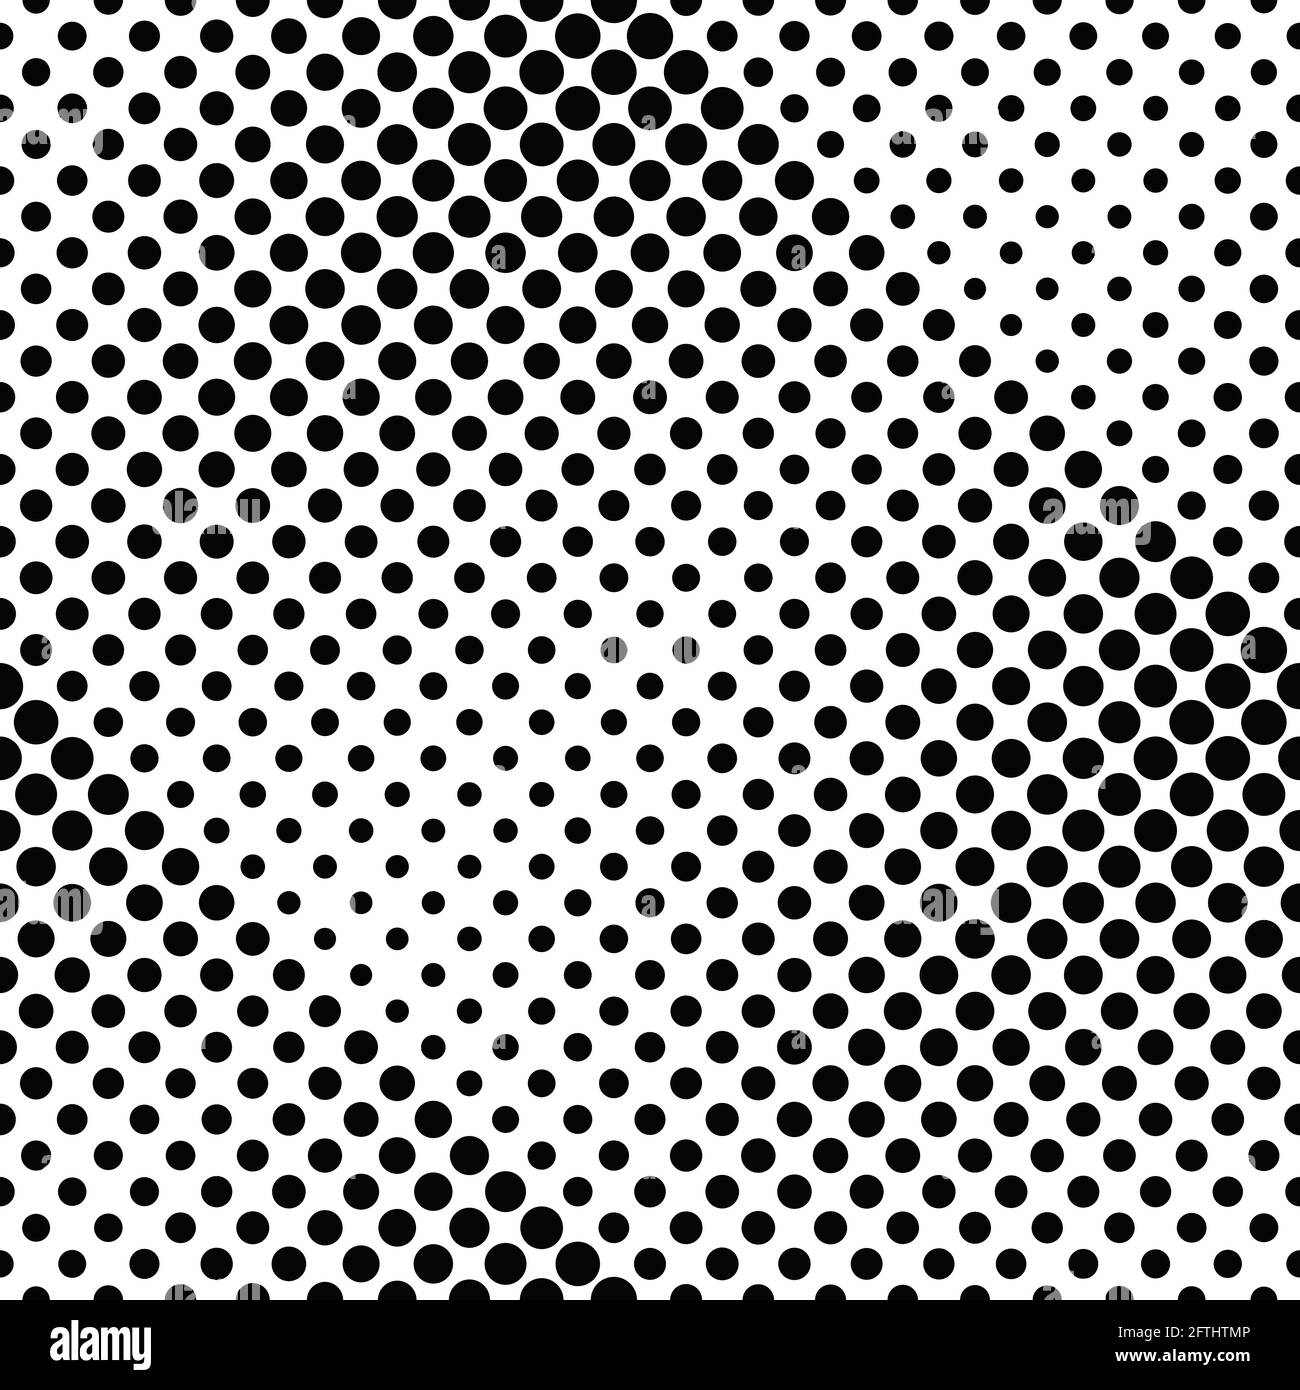 Monochrome Kreis Muster Hintergrund Design - abstract Vector Graphic Stock Vektor